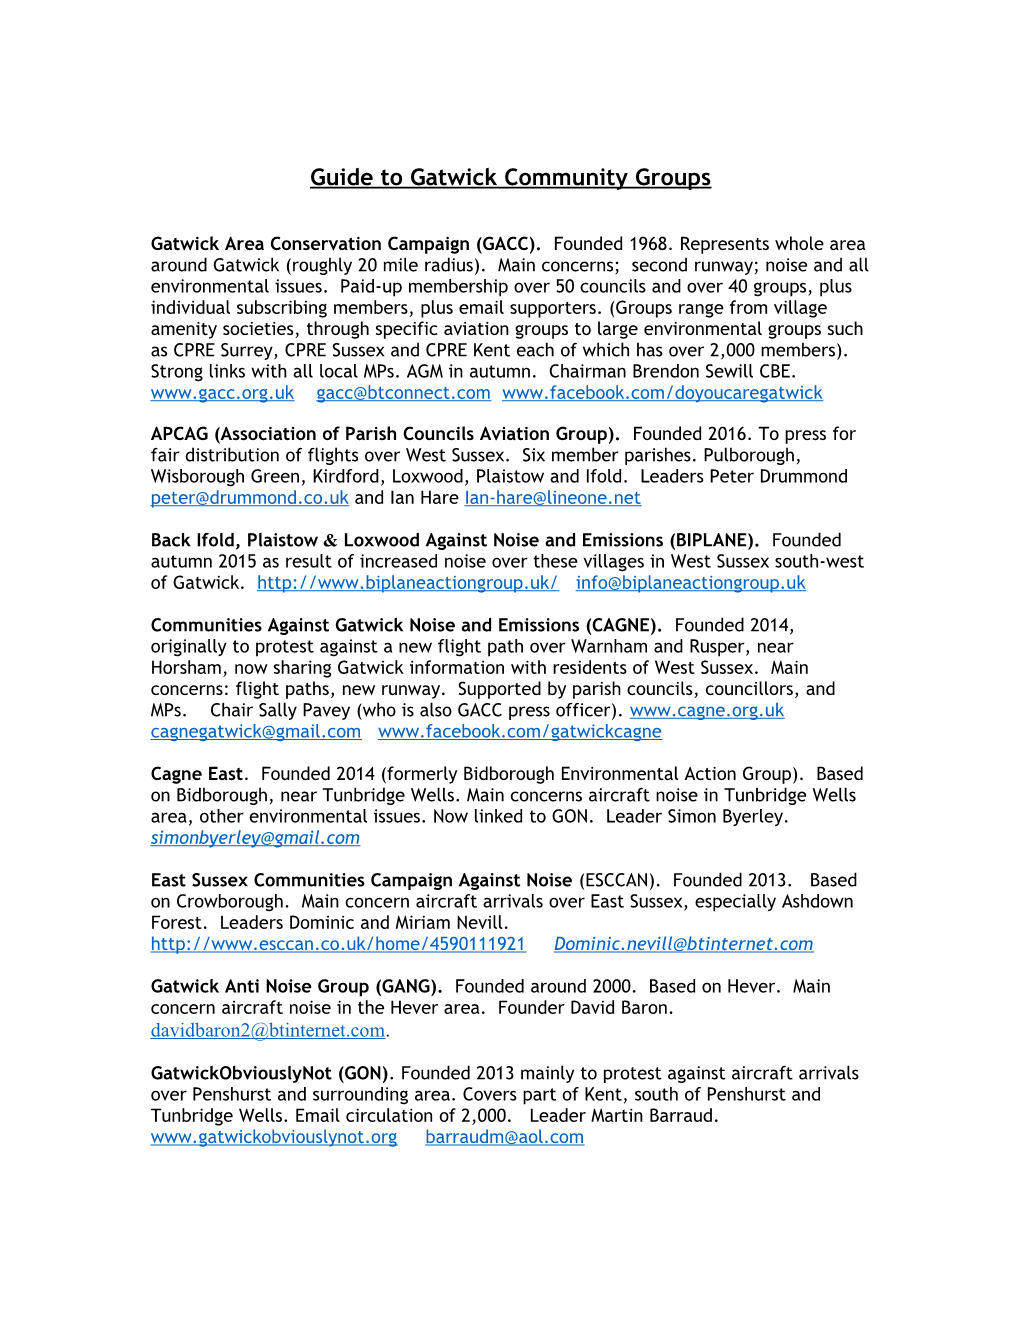 Guide to Gatwick Communitygroups